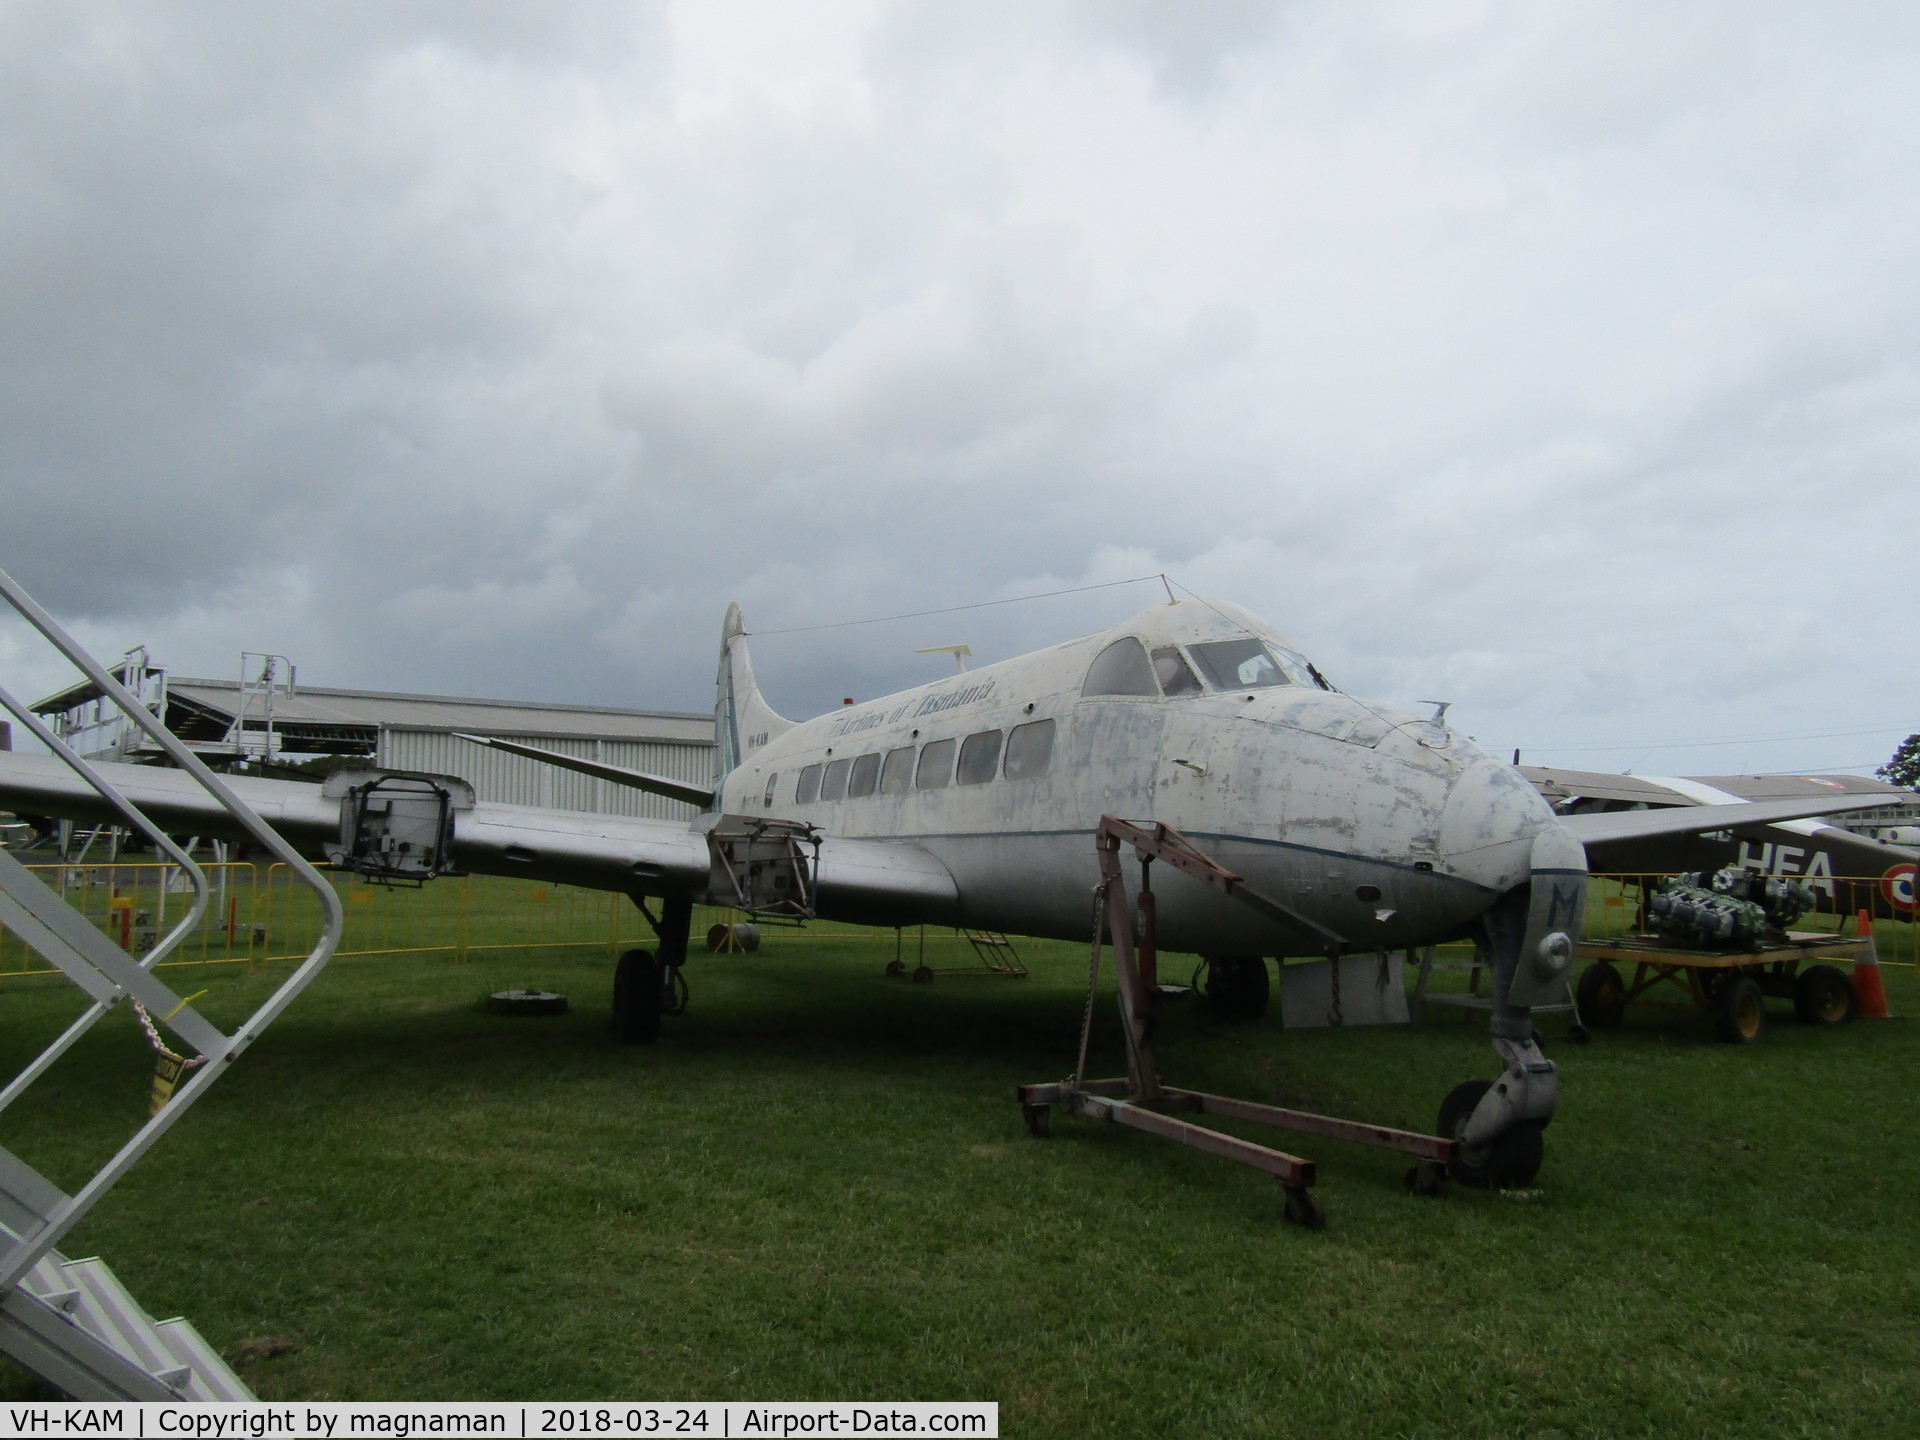 VH-KAM, 1957 De Havilland DH-114 Heron 2D C/N 14123, Just before rain came at Caloundra Musuem